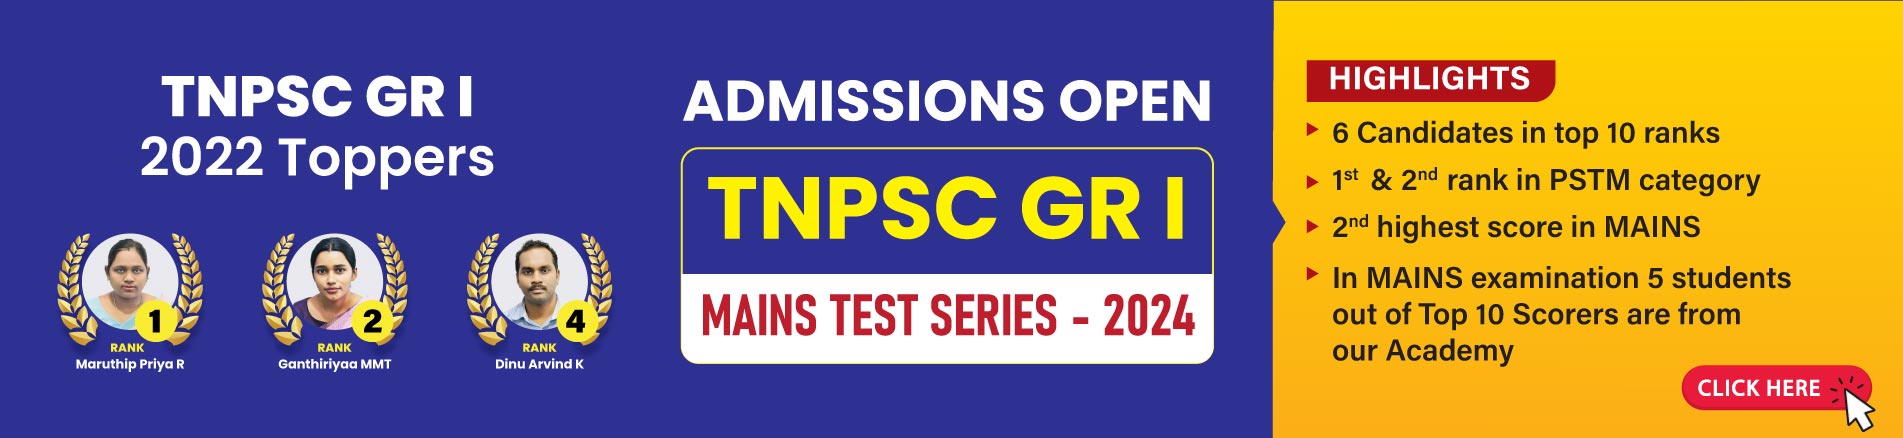 TNPSC G1 Mains Test Series